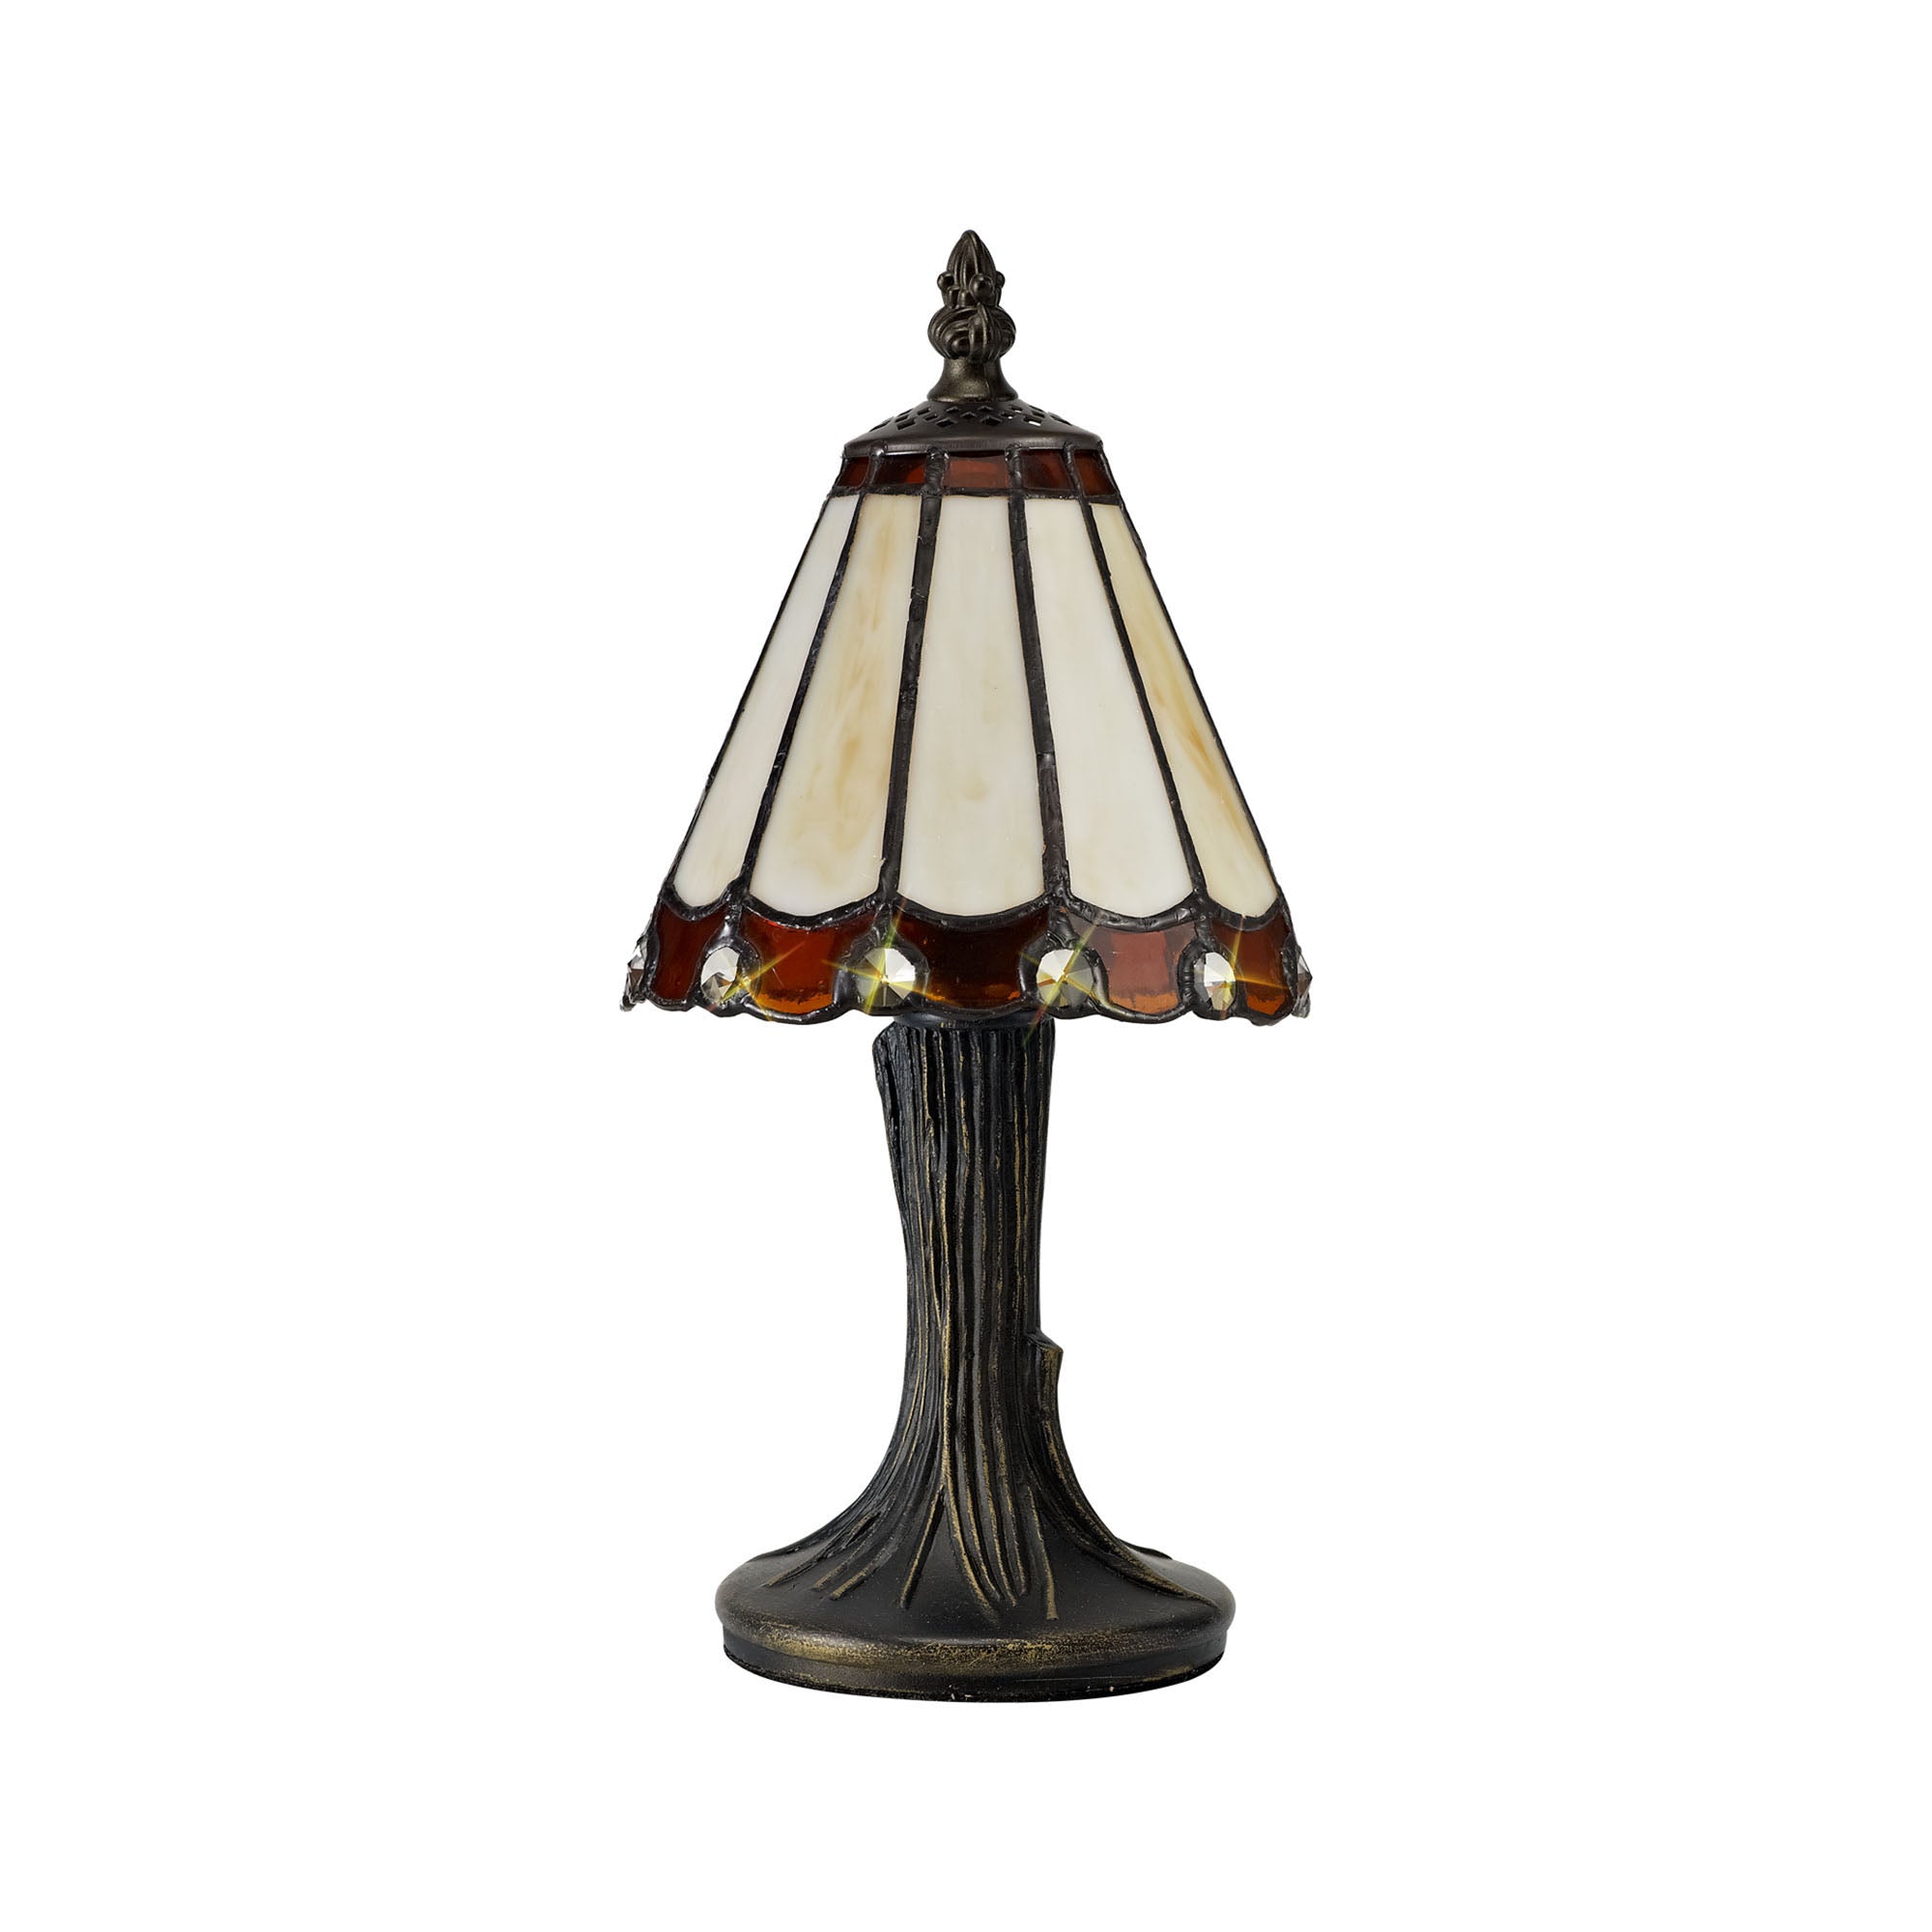 Umbrella Tiffany Table Lamp, 1 x E14, Crealm/Brown/Clear Crystal Shade